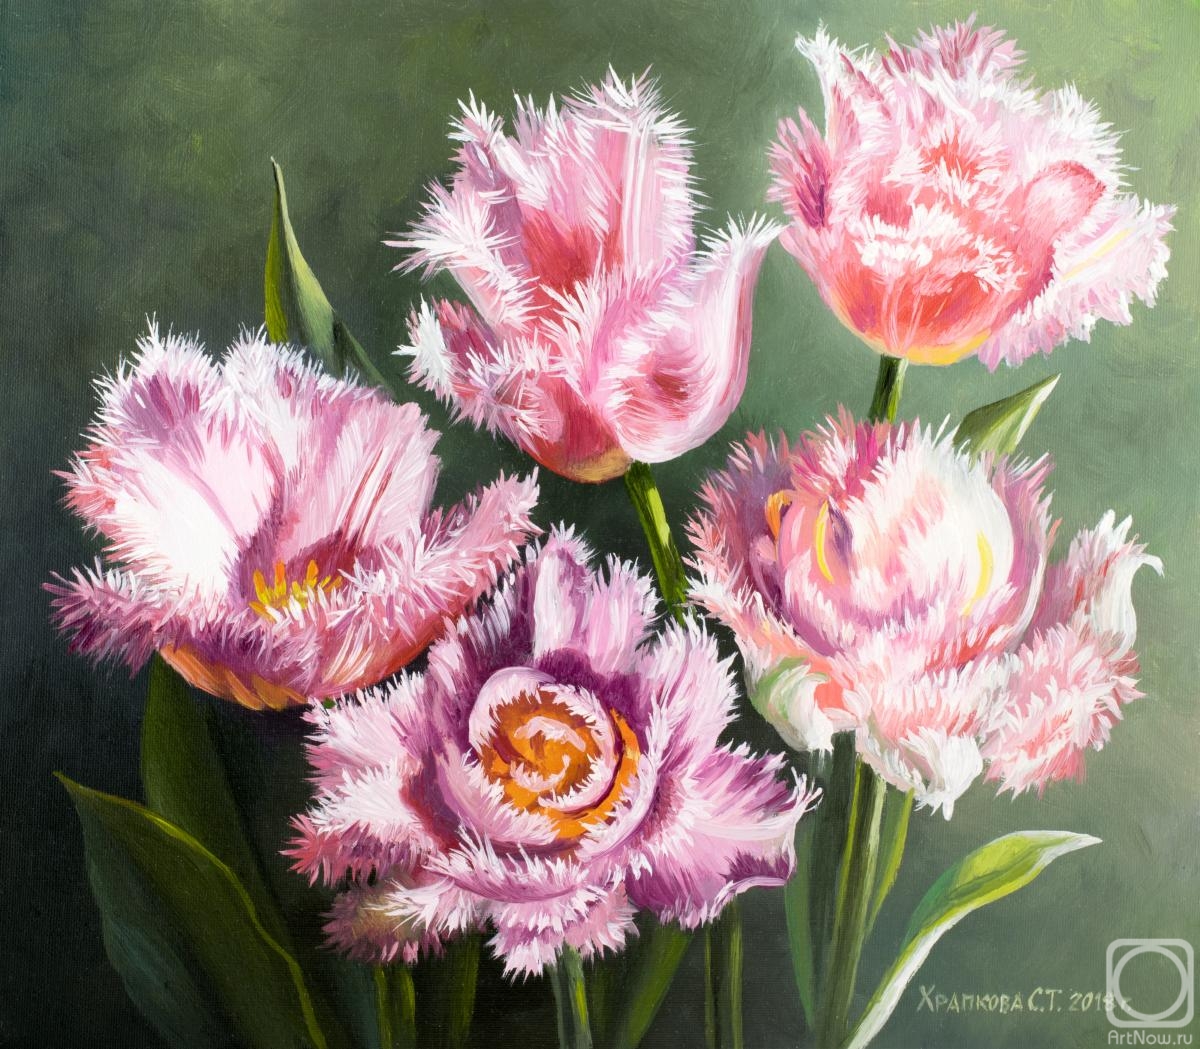 Khrapkova Svetlana. Tulips Queensland